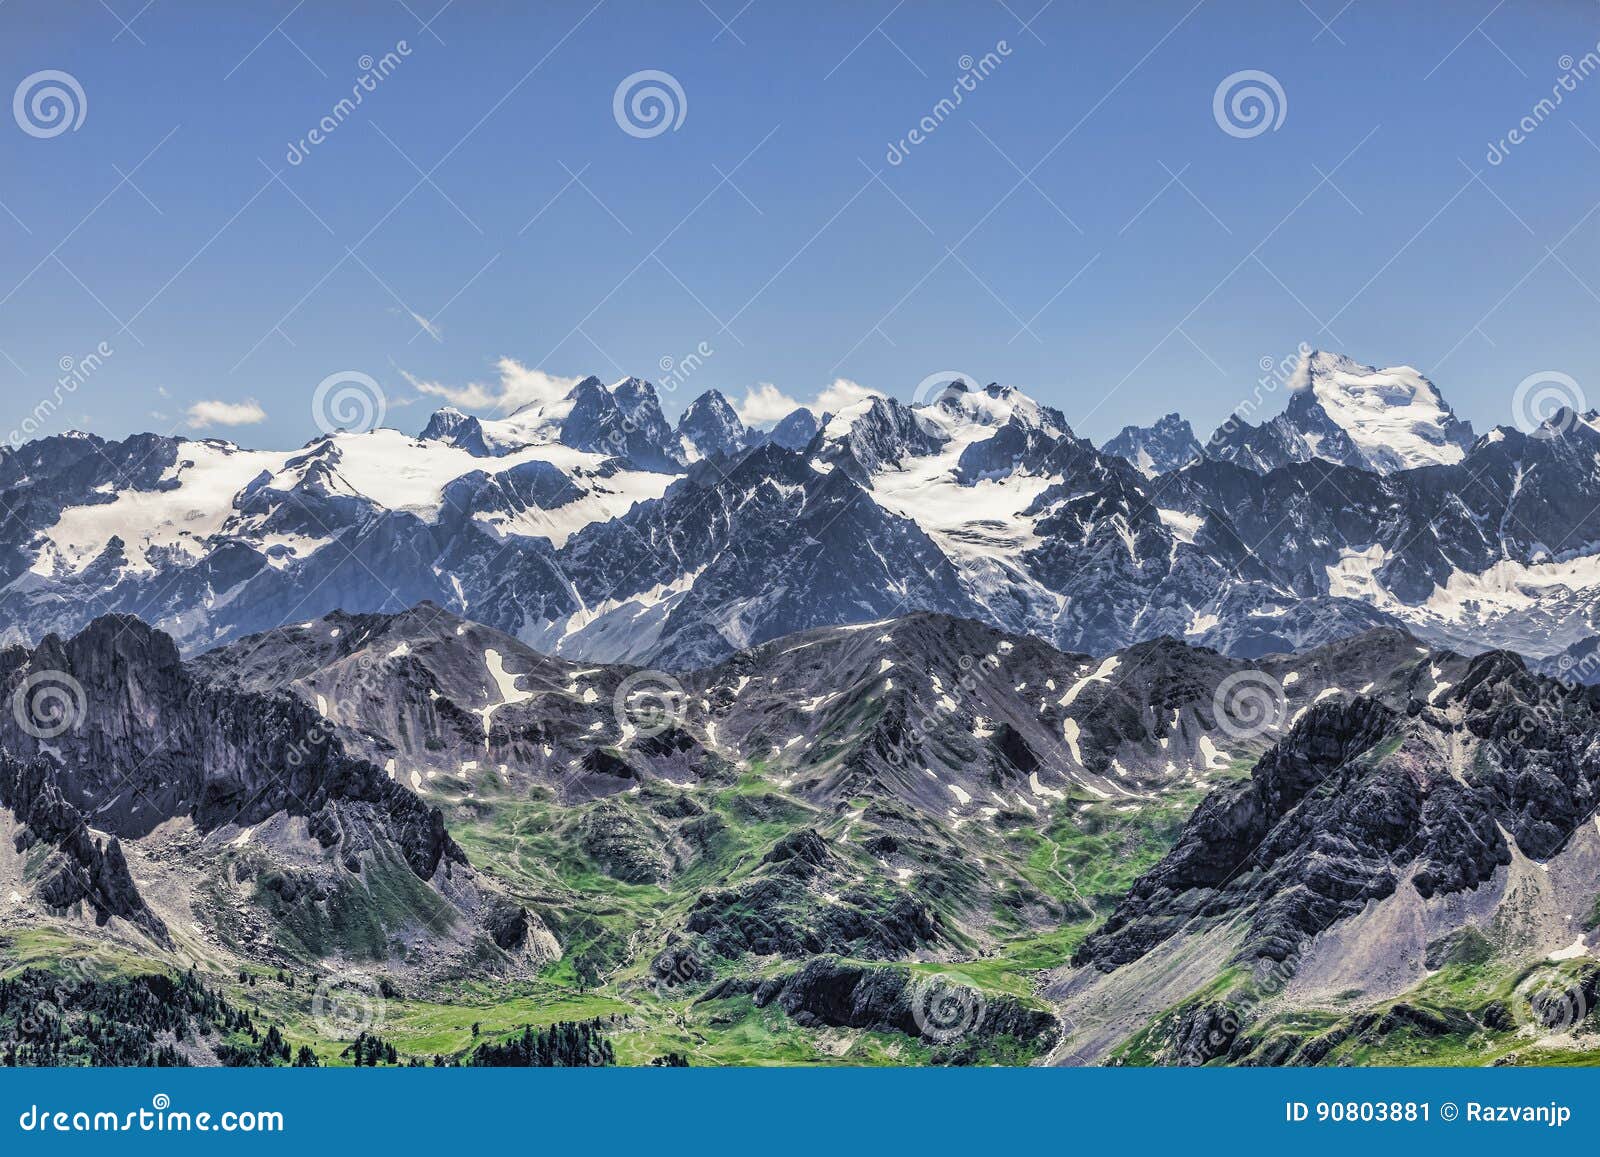 high altitude landscape in alps